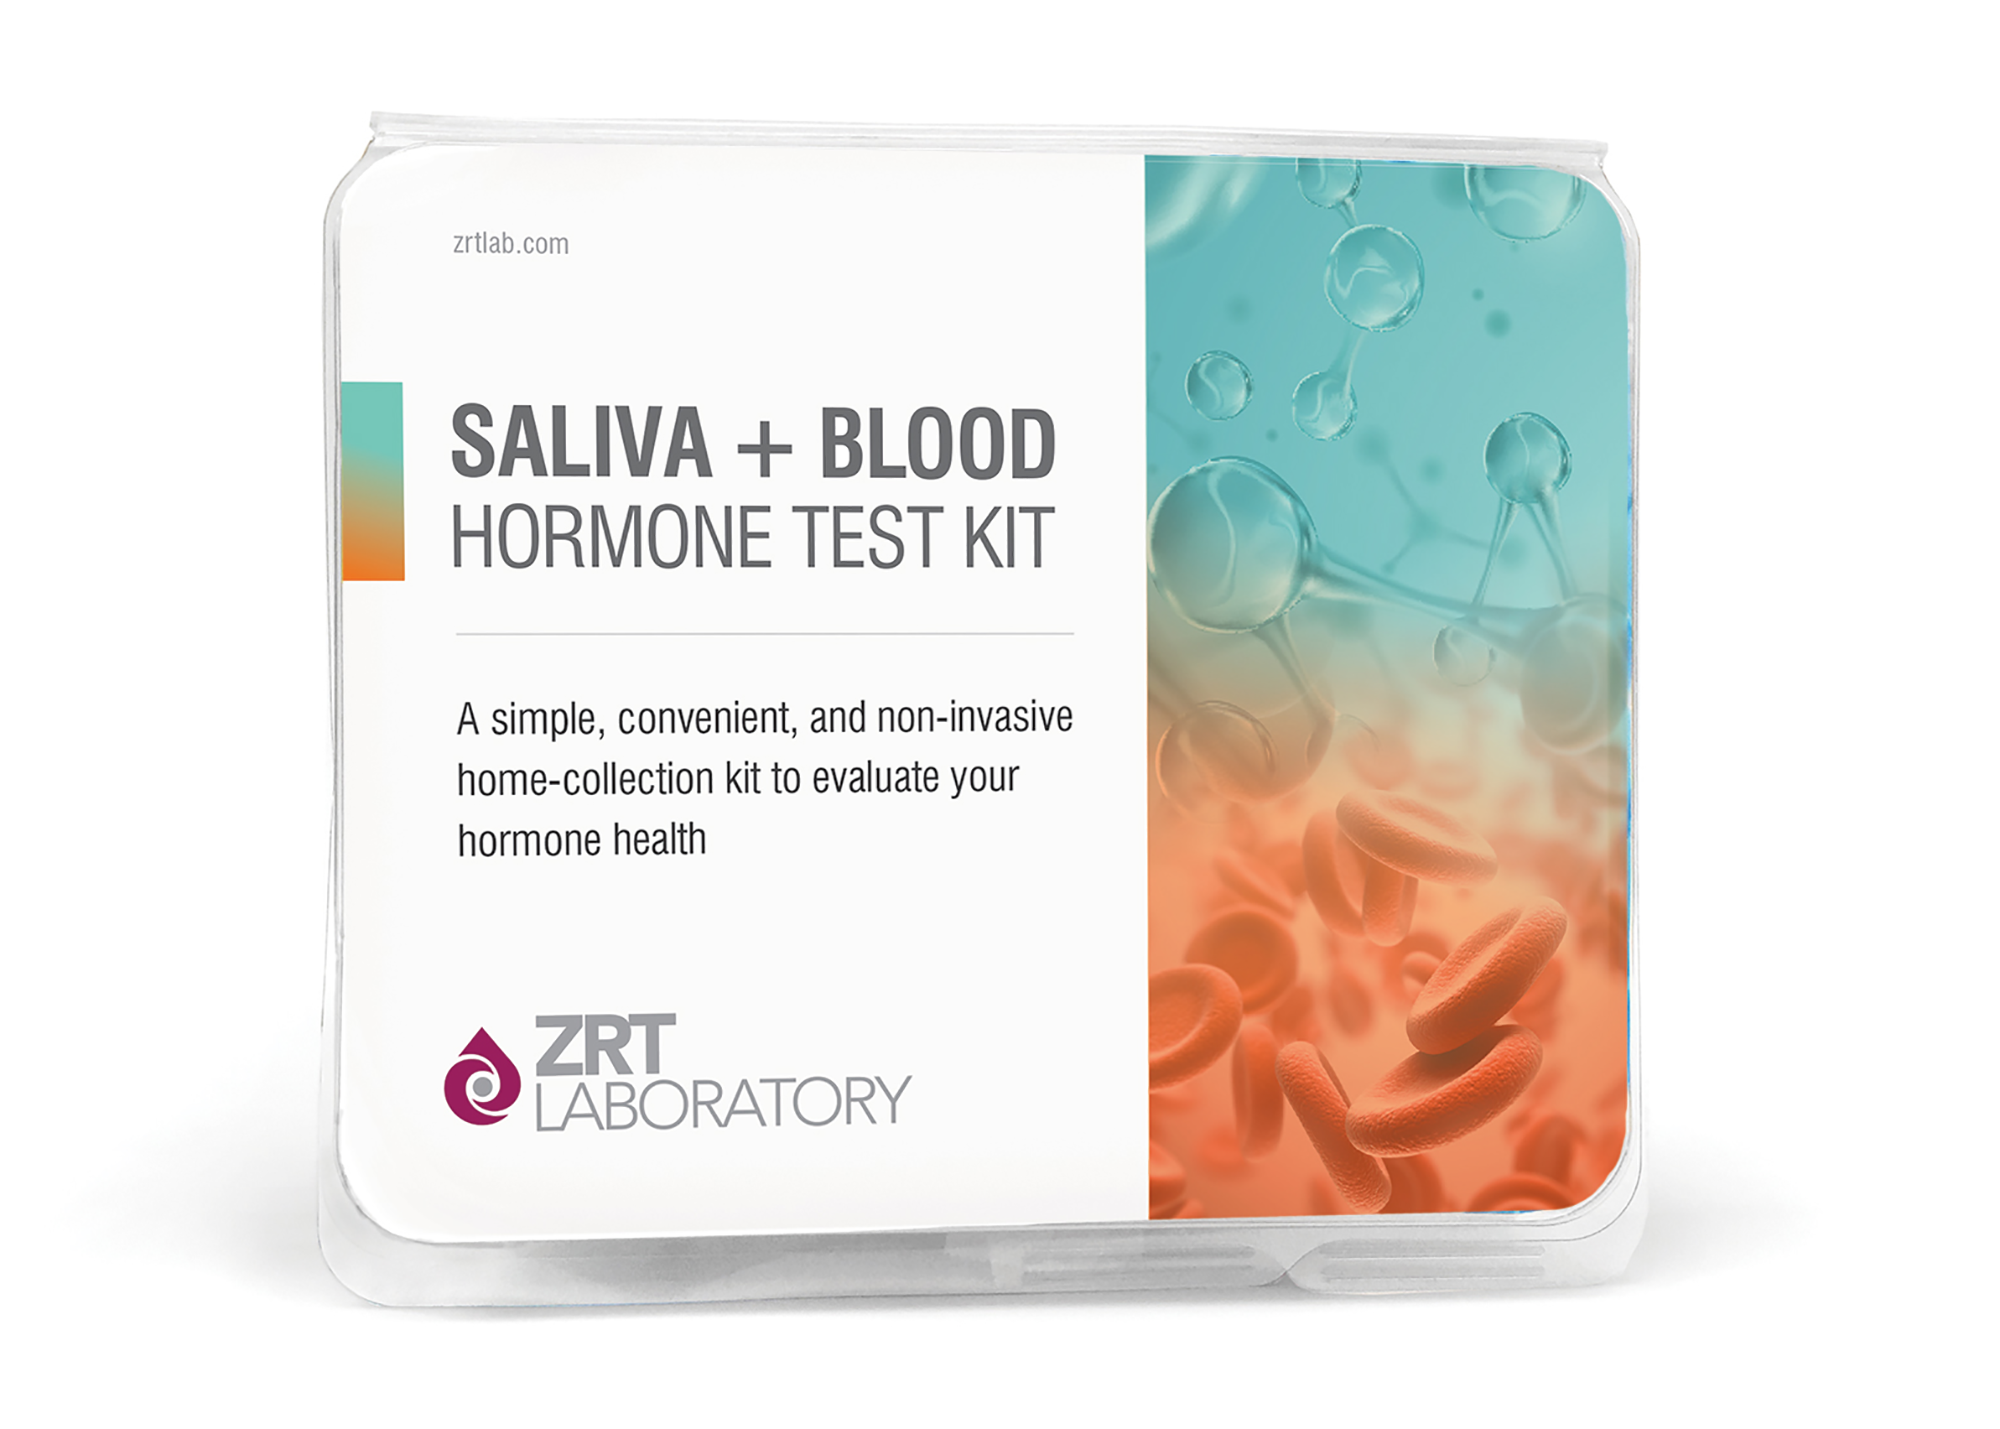 ZRT Laboratory Saliva + Blood Hormone Test Kit